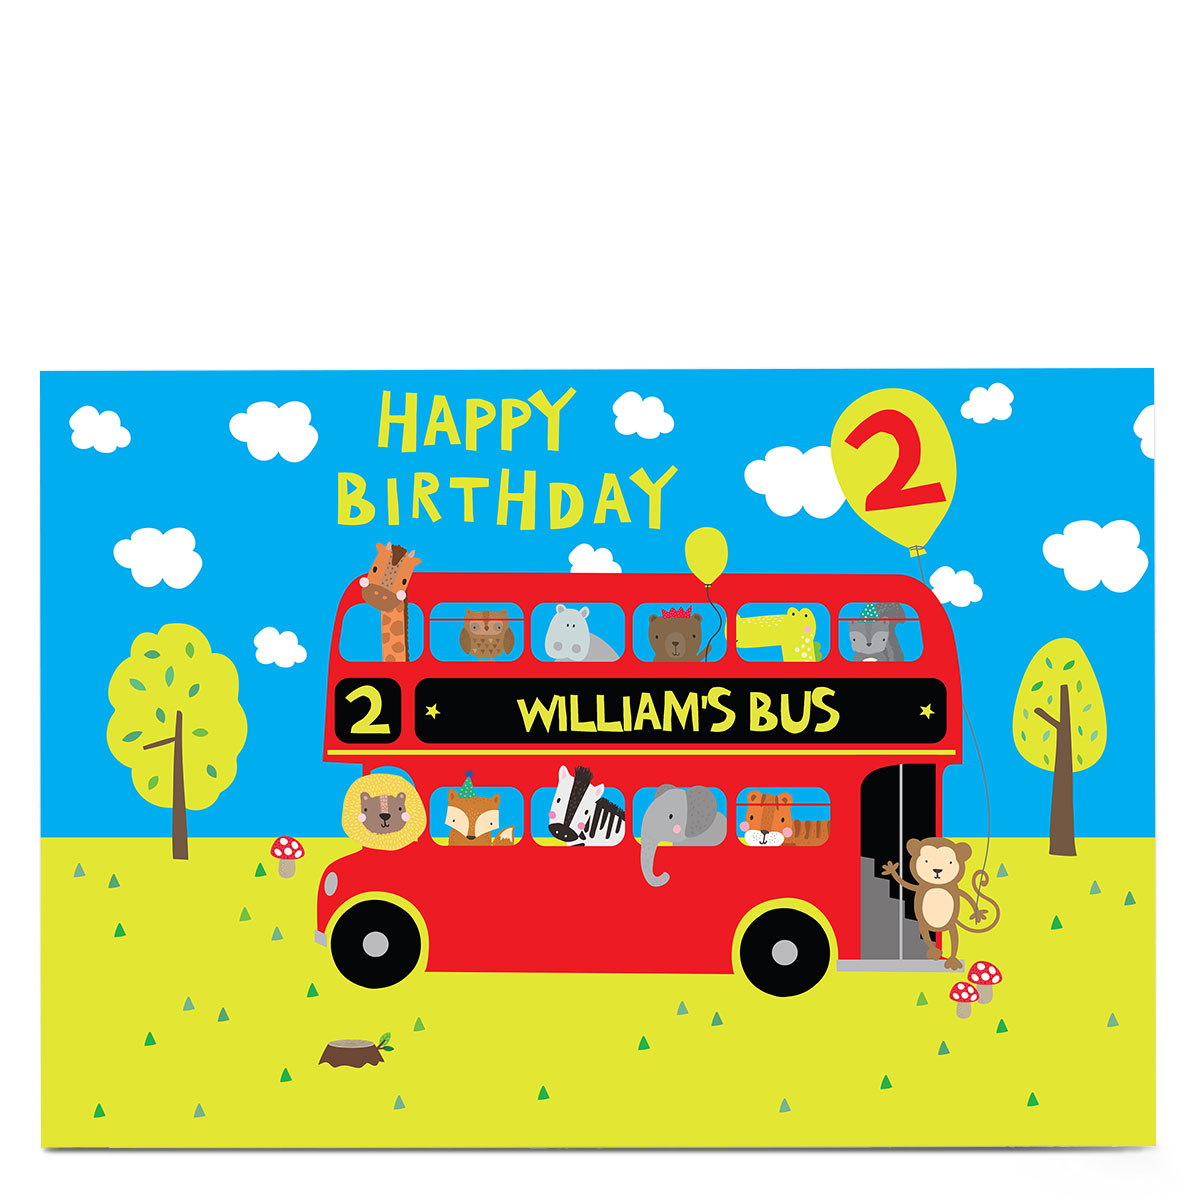 Personalised Editable Age Birthday Card - Animal Birthday Bus